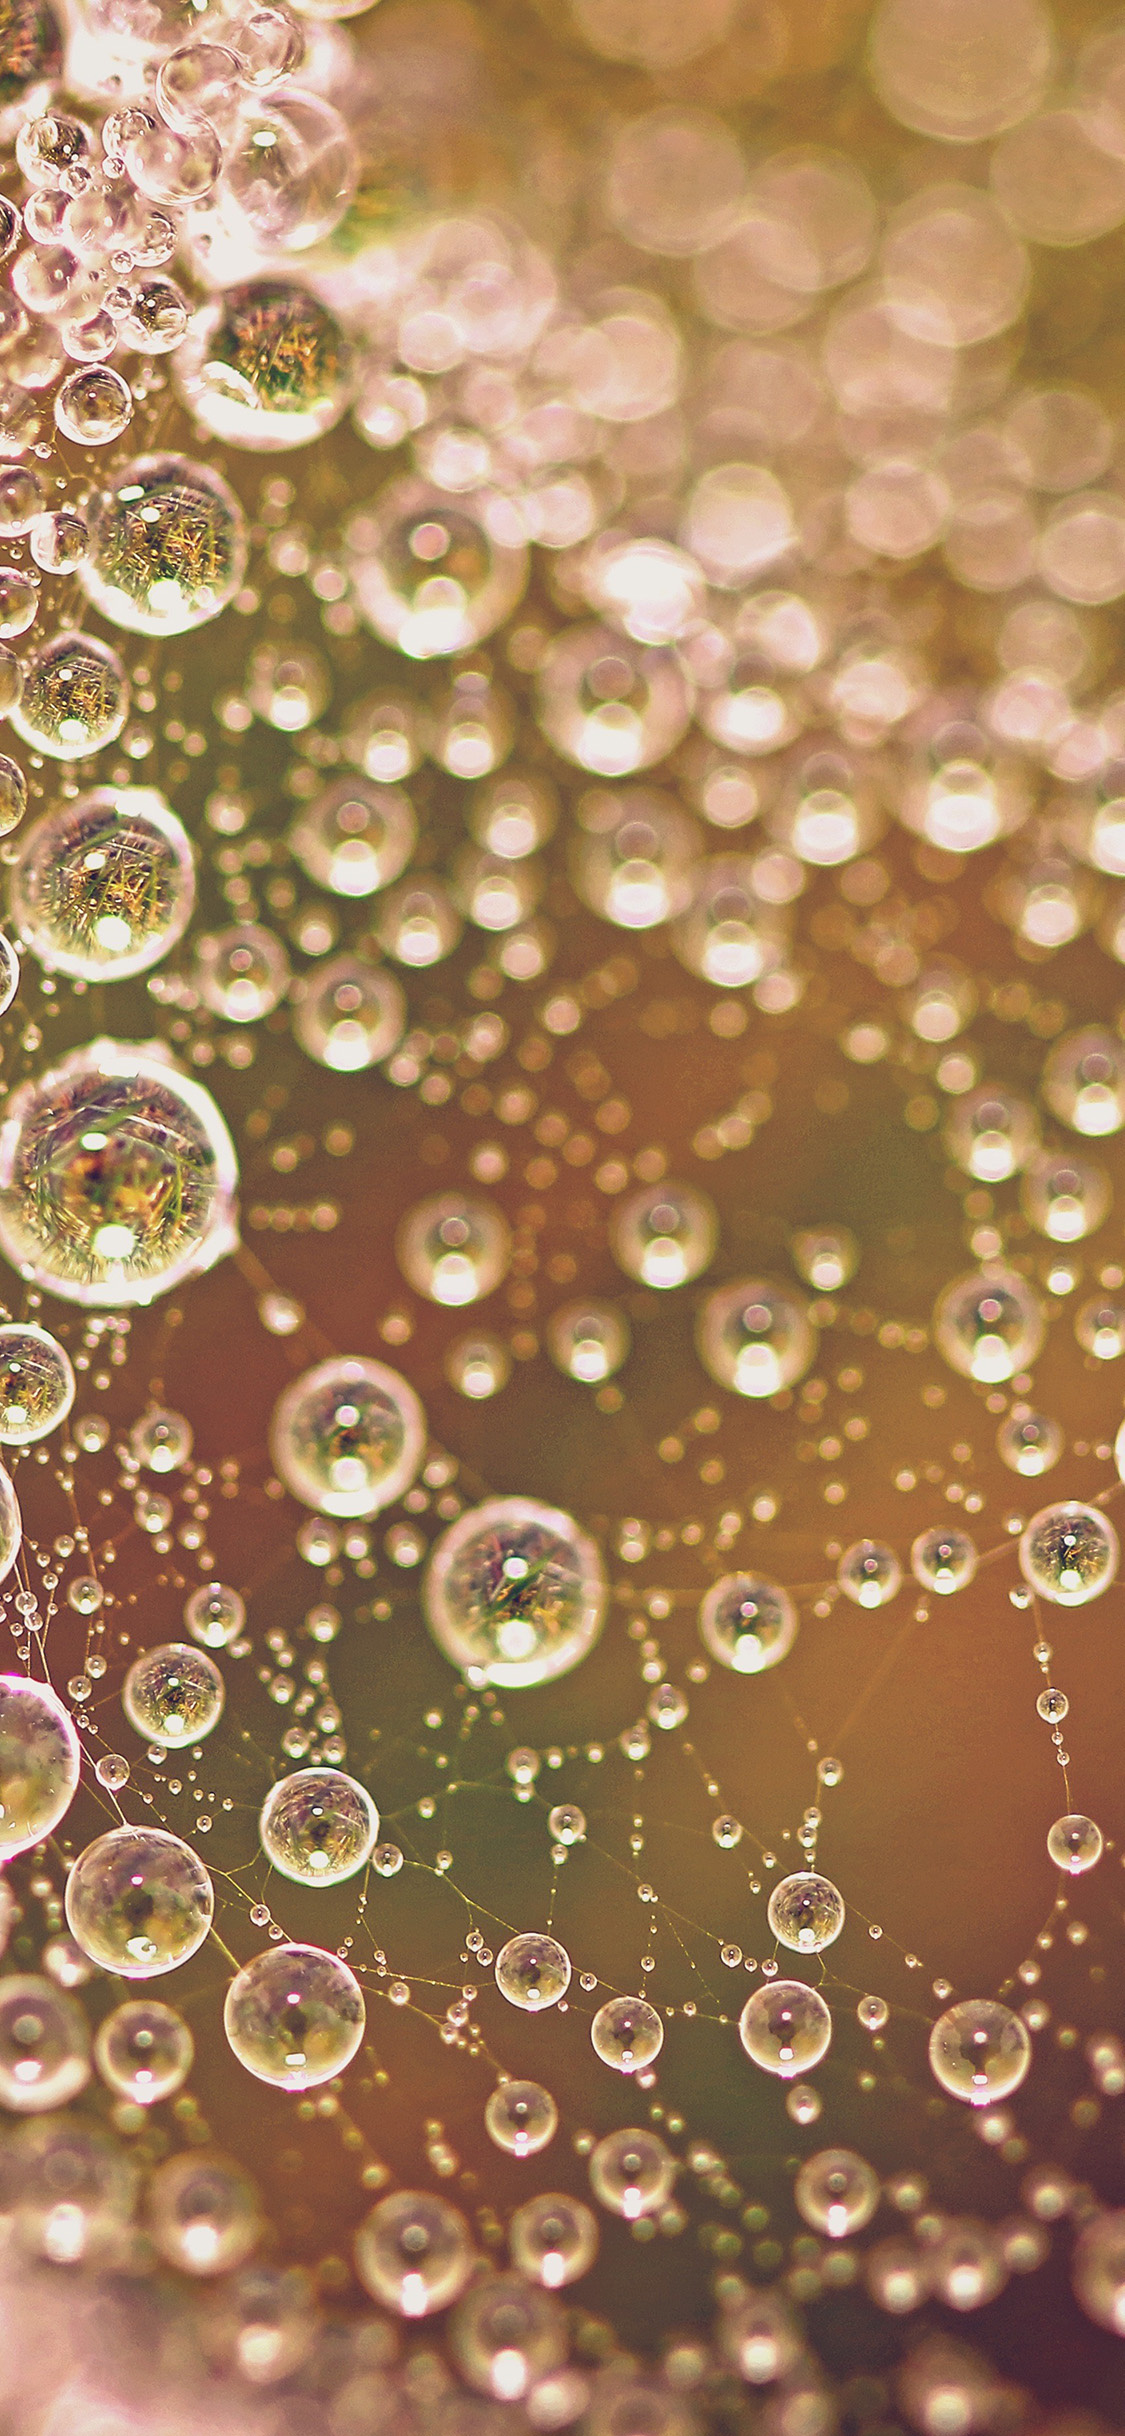 | iPhone X wallpaper | wd90-pattern-background-rain- bubbles-texture 1130x2440